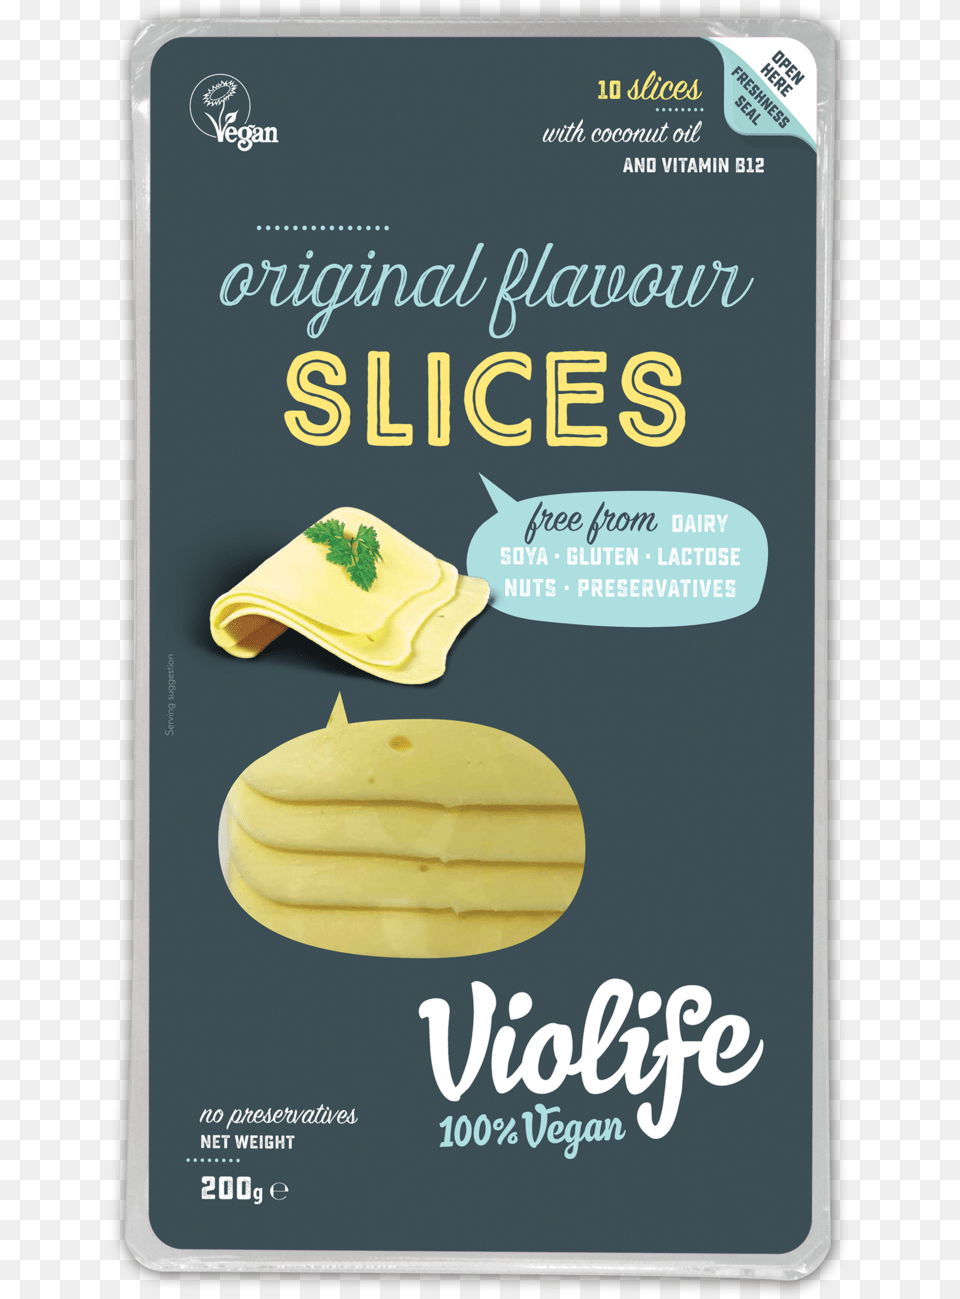 Violife Vegan Cheese, Advertisement, Poster, Bread, Food Free Png Download